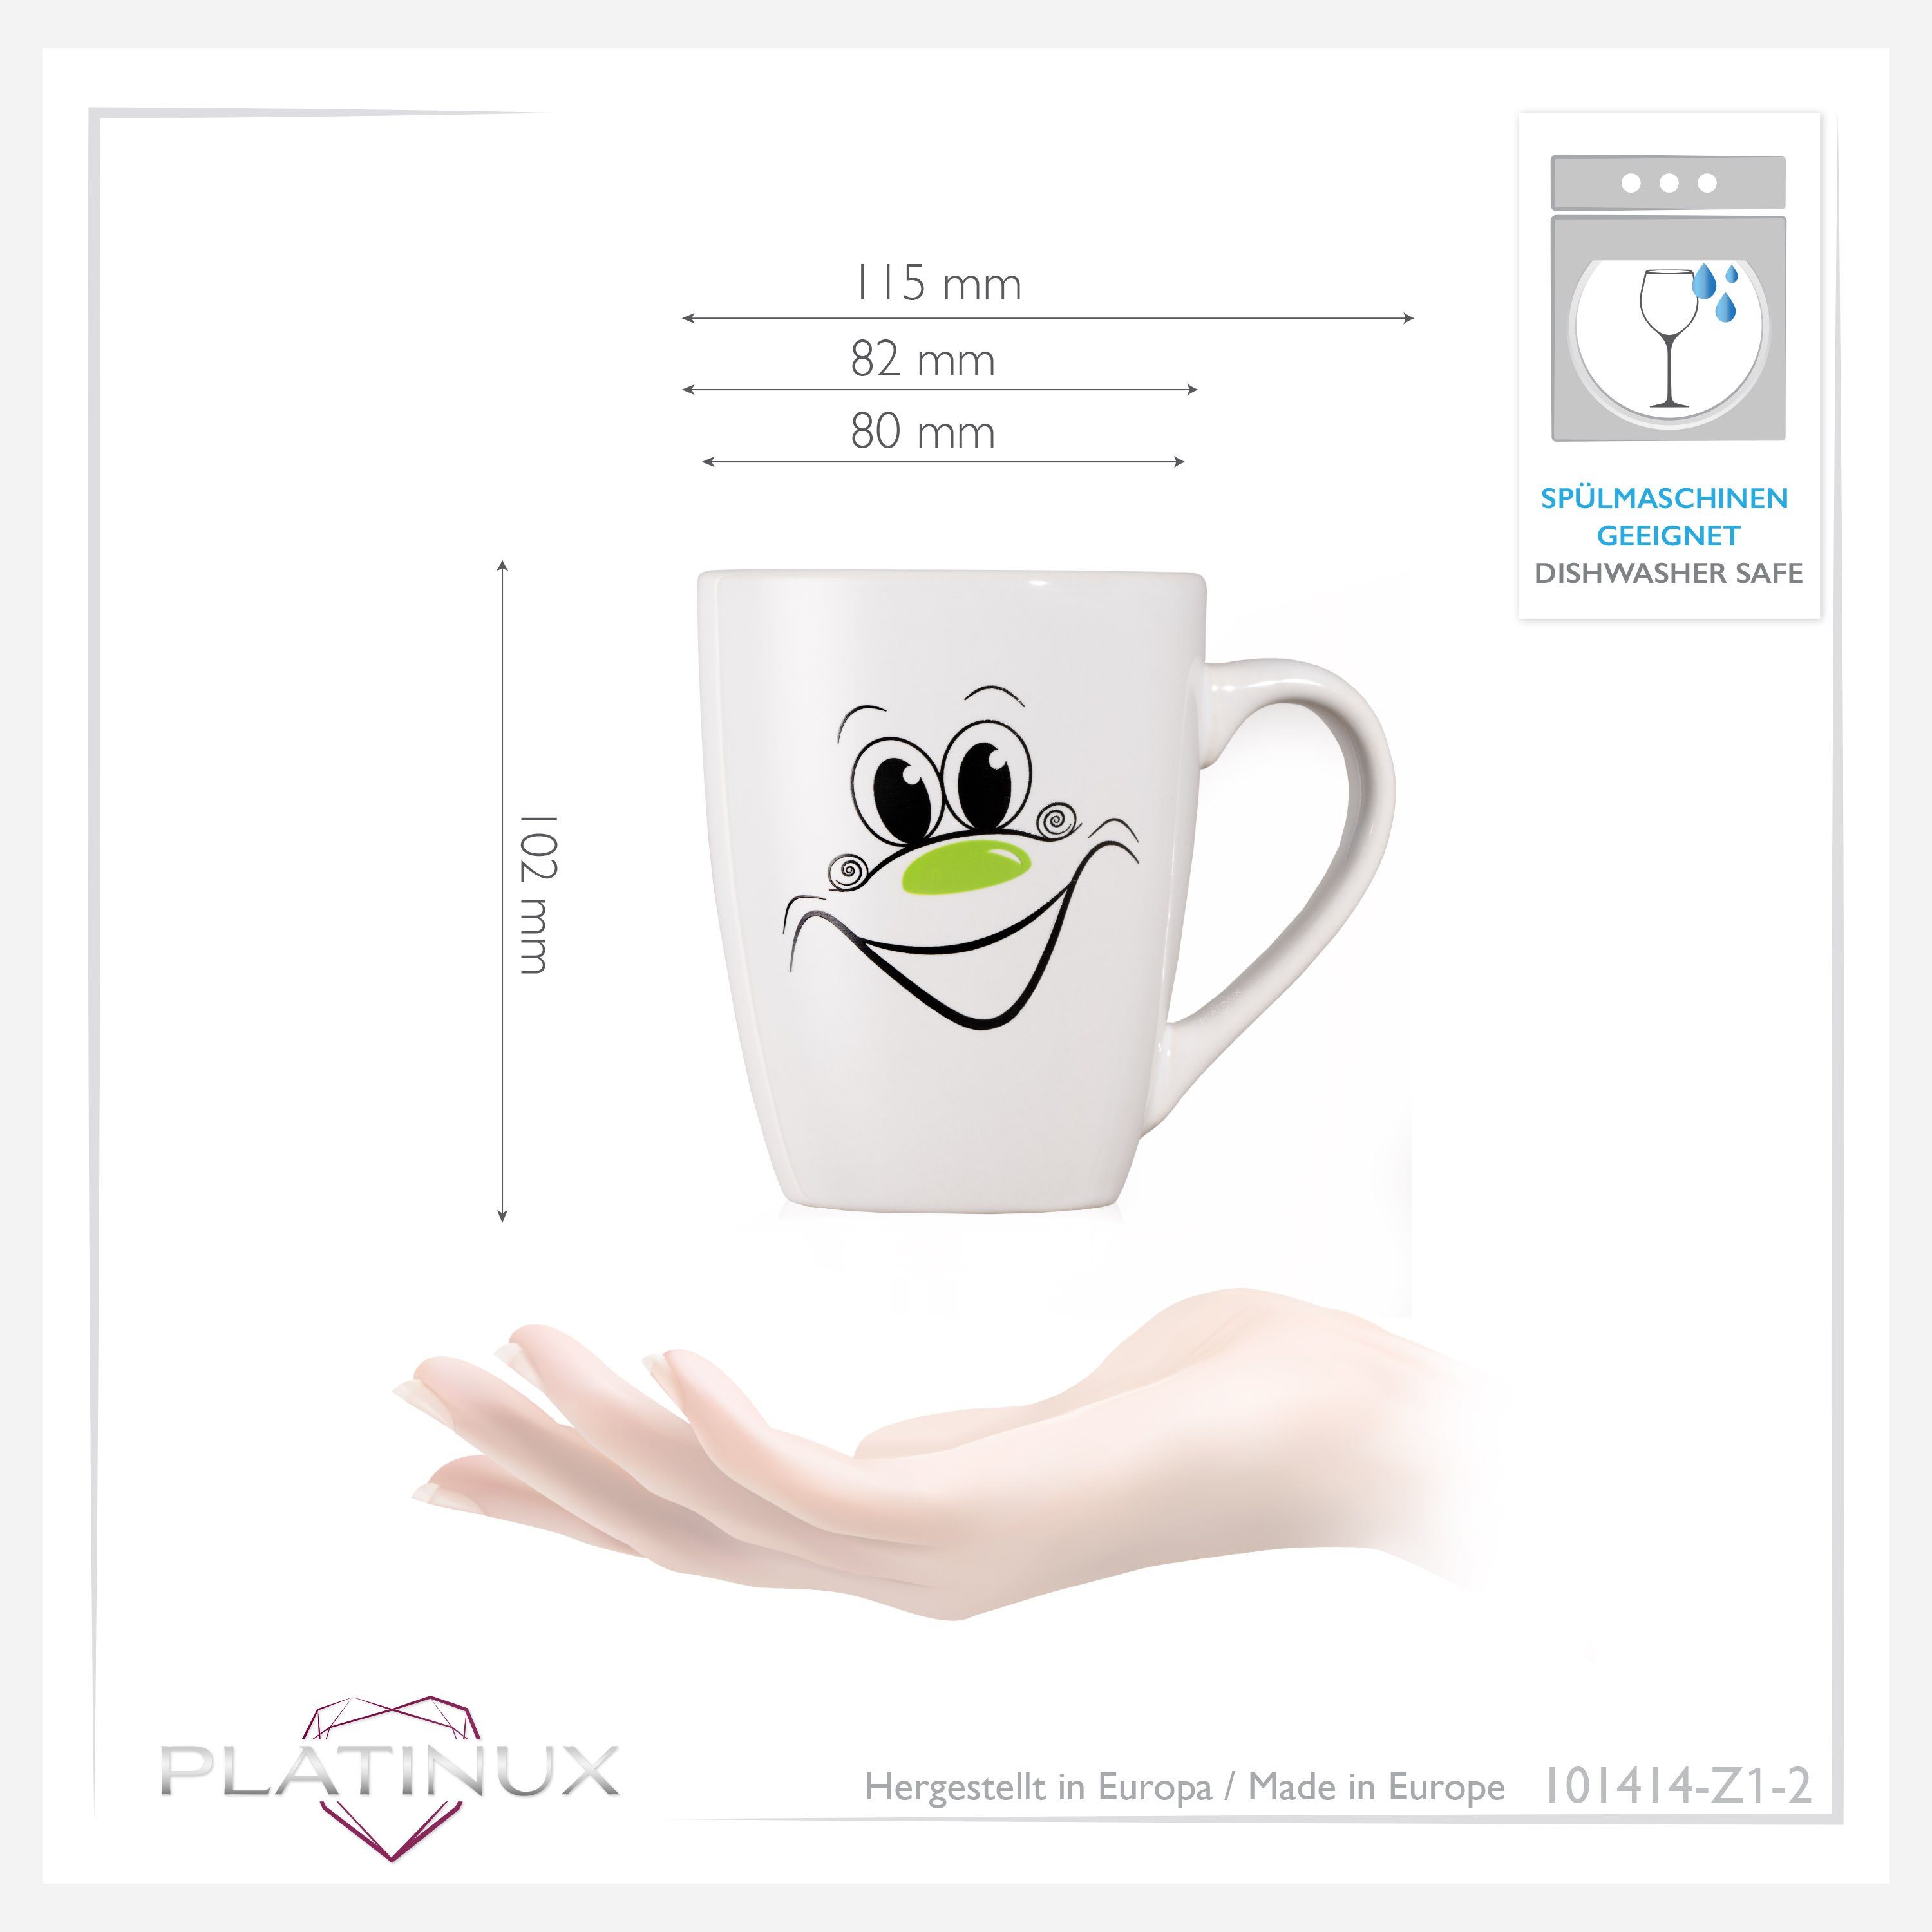 PLATINUX Tasse Kaffeetasse mit Karneval Teebecher lustigem Grün, Keramik, 300ml) (max. 250ml Teetasse Kaffeebecher Motiv lachendem